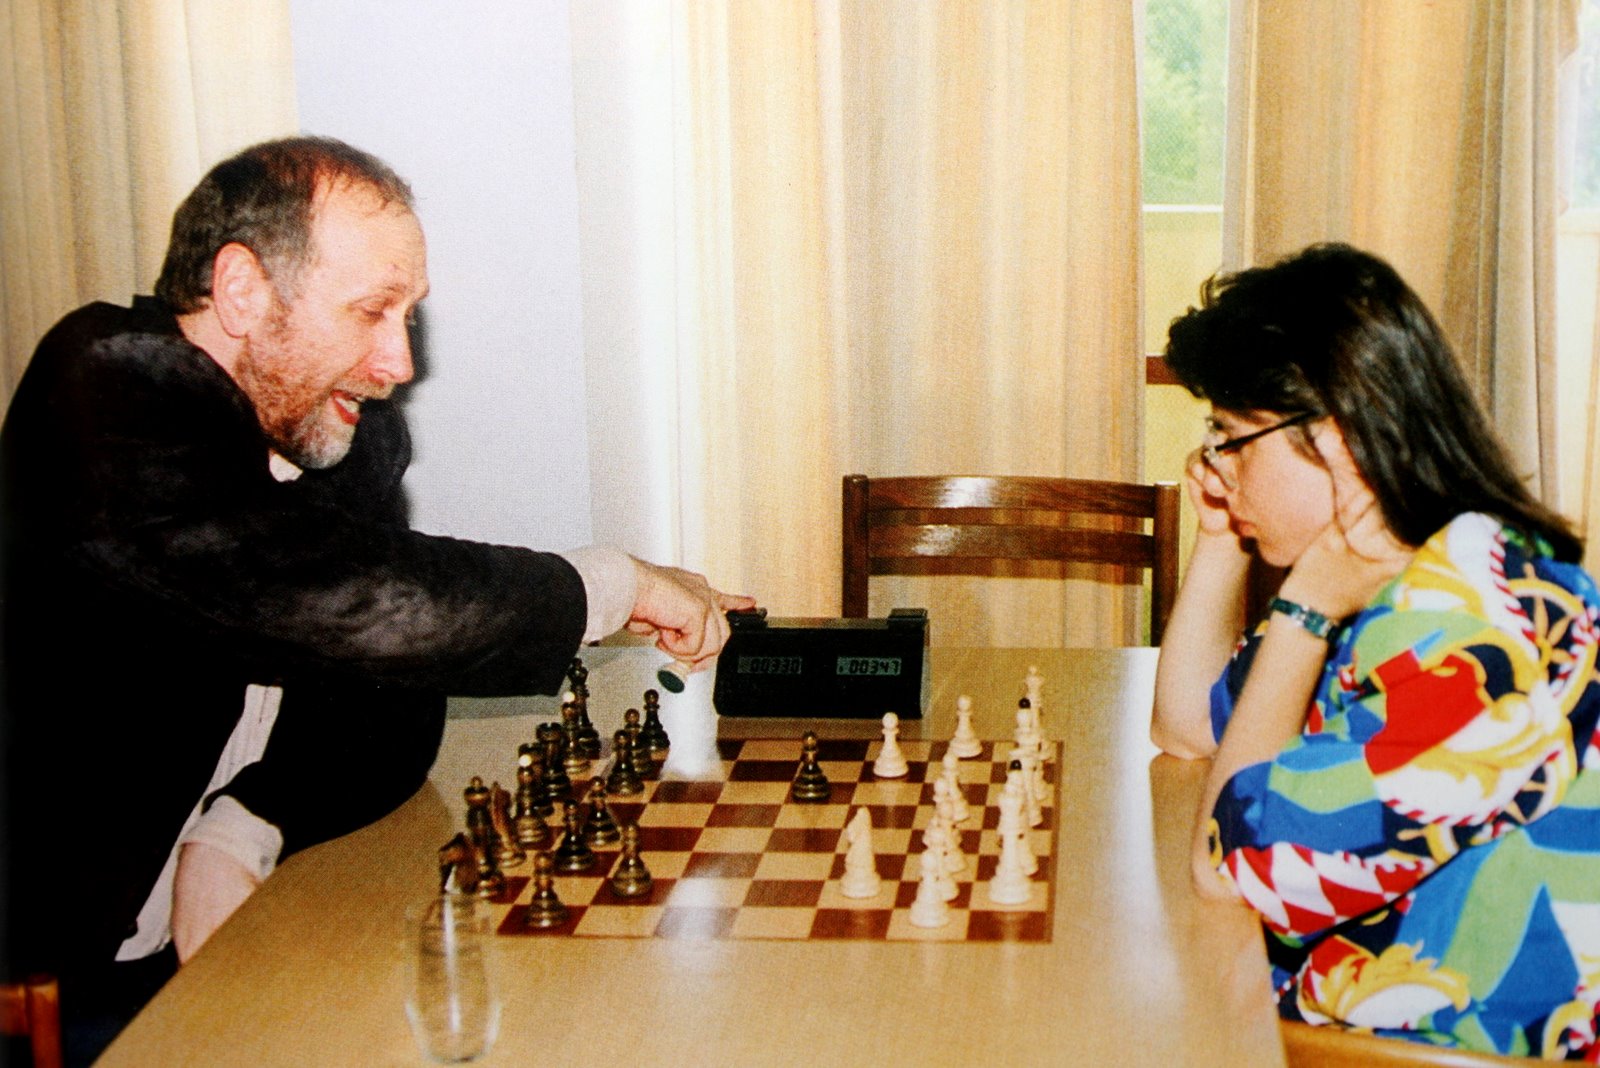 Judit Polgar on X: It's Bobby Fischer's birthday. He left an